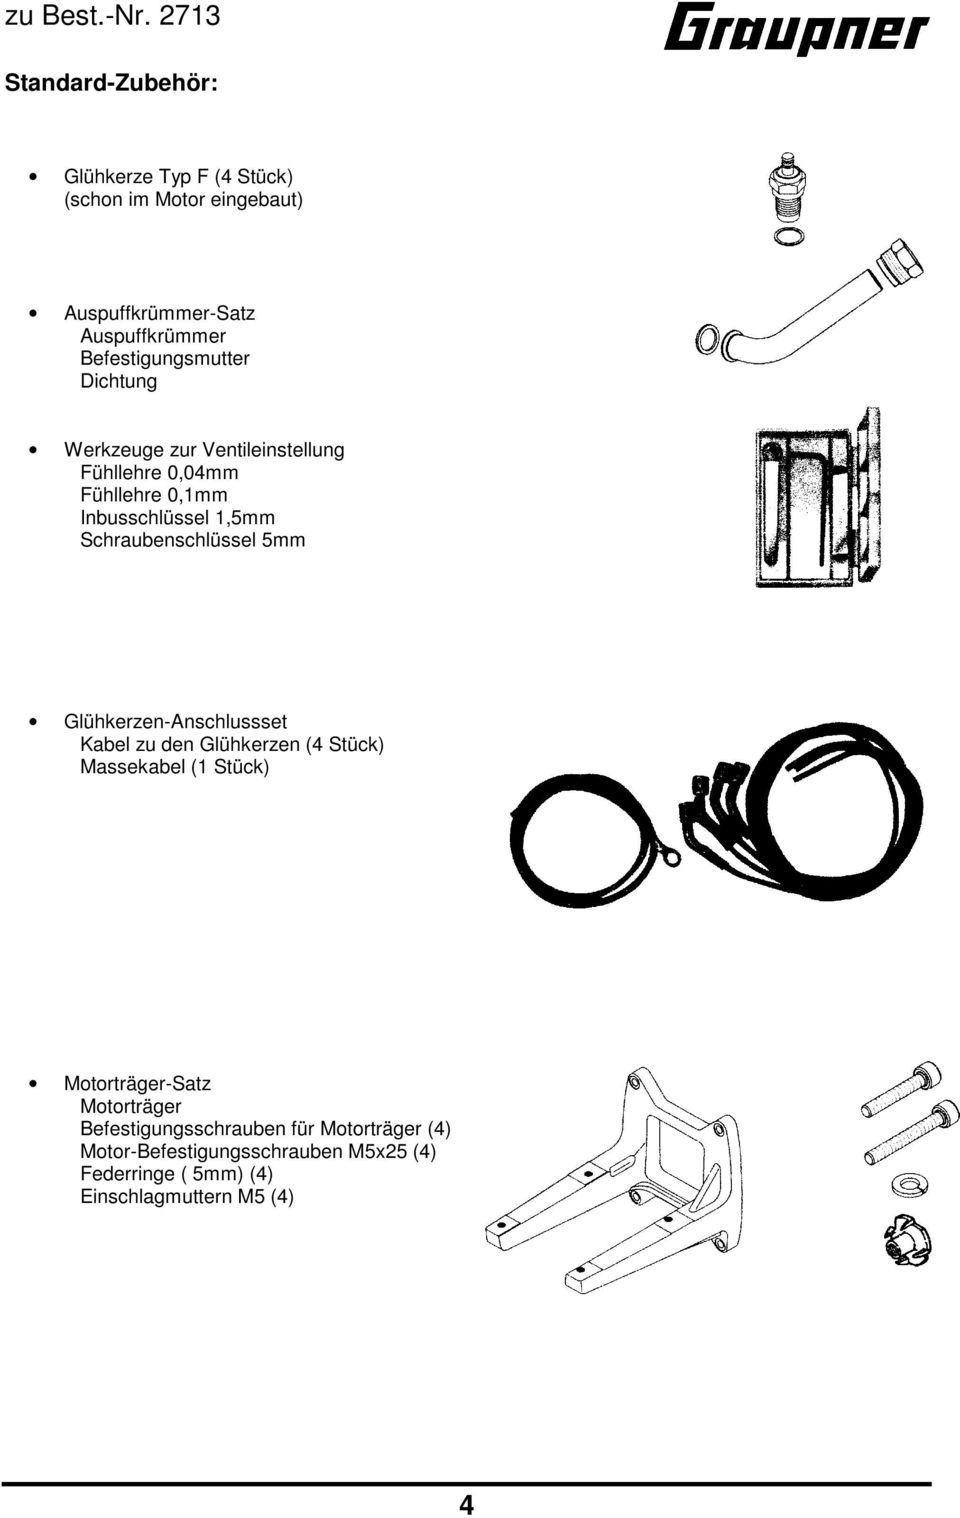 Schraubenschlüssel 5mm Glühkerzen-Anschlussset Kabel zu den Glühkerzen (4 Stück) Massekabel (1 Stück) Motorträger-Satz